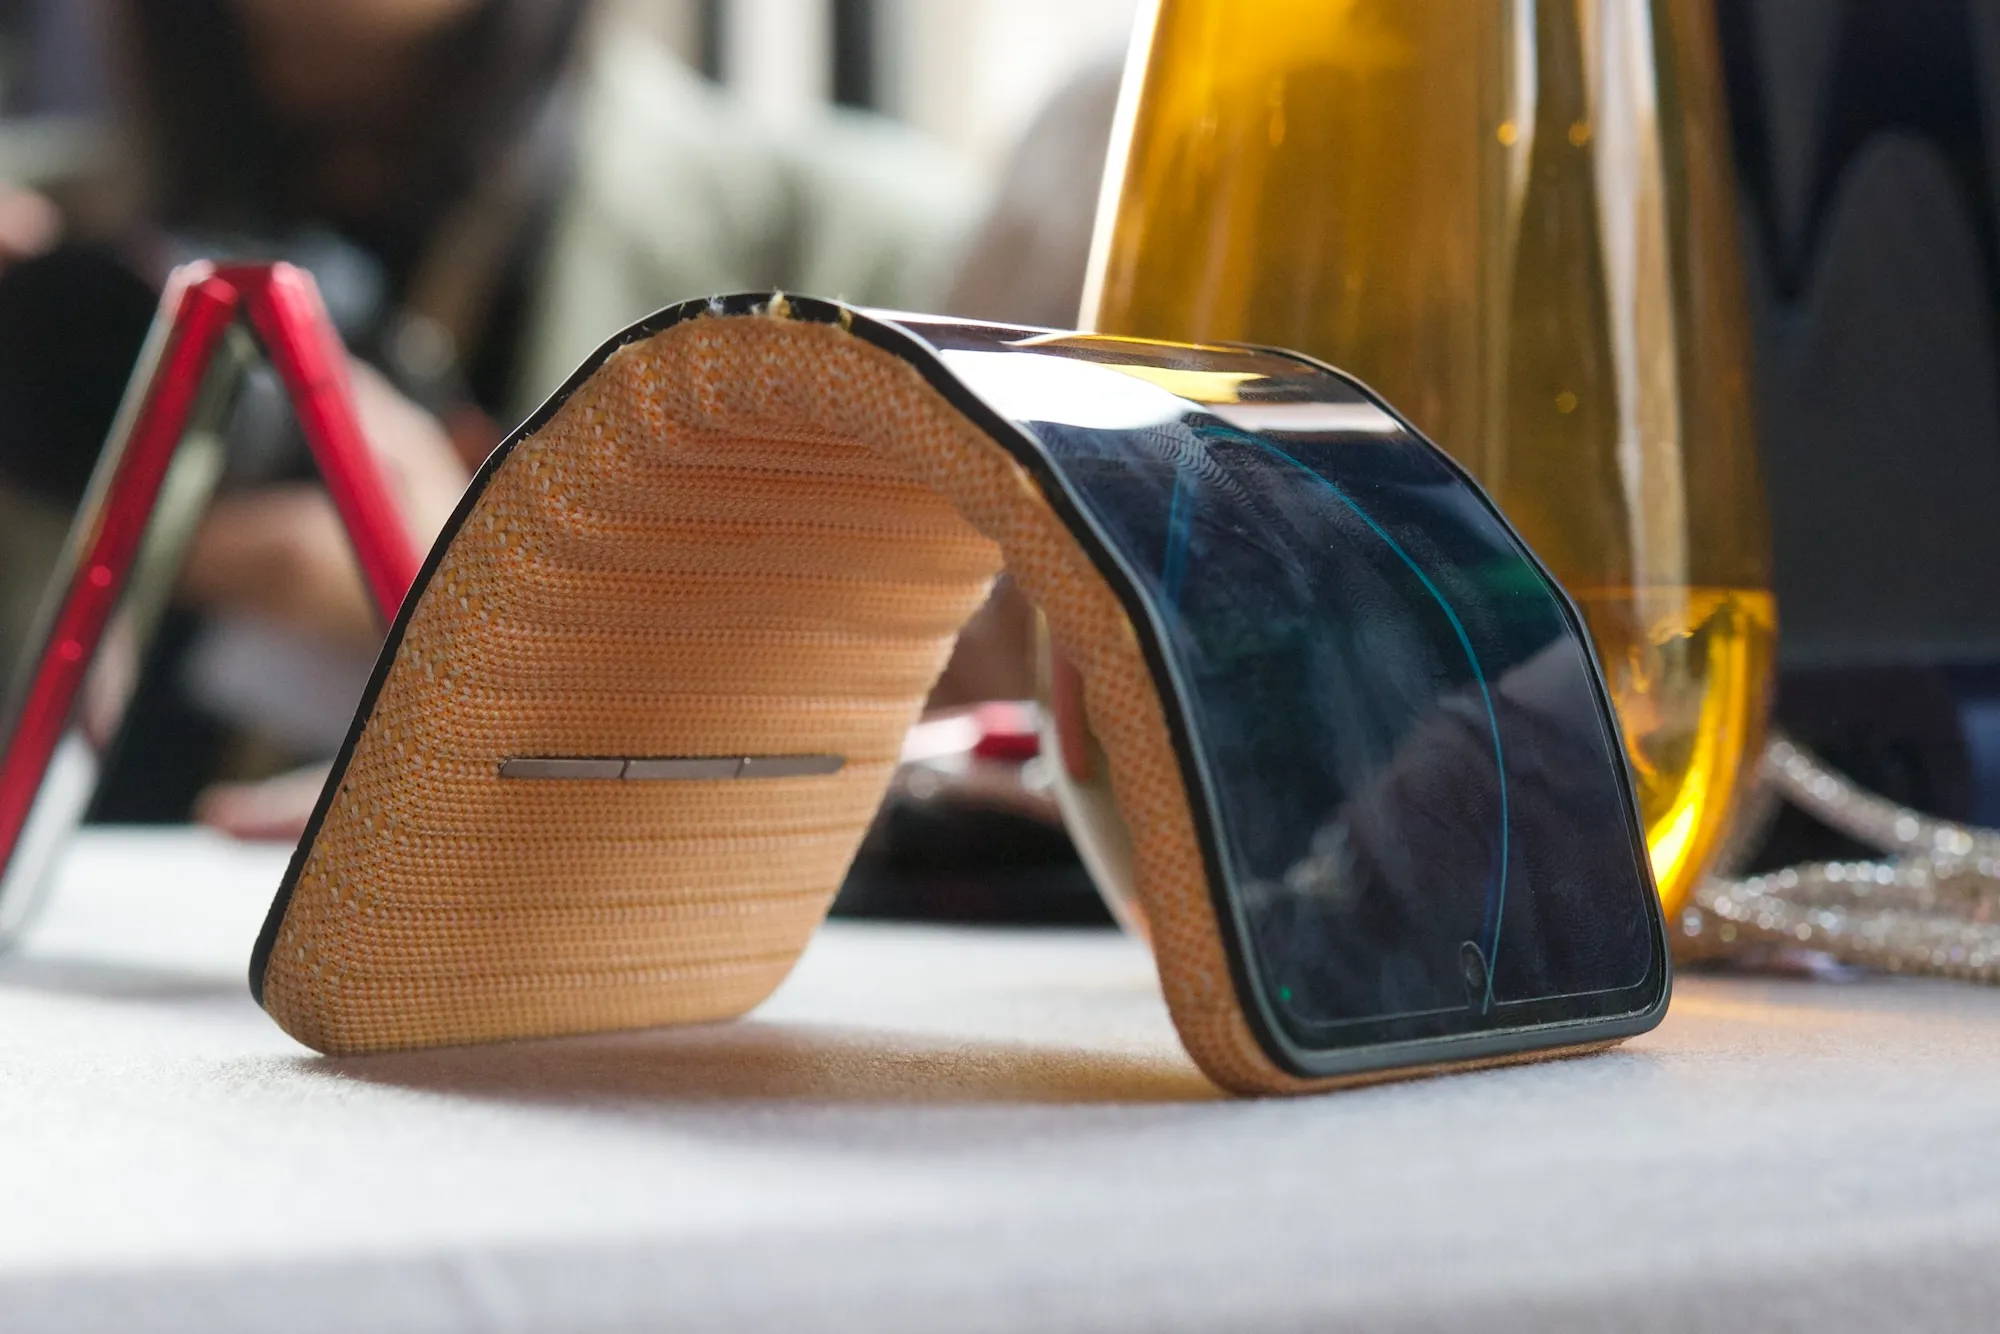 Motorola’s concept folding phone sitting on a table.